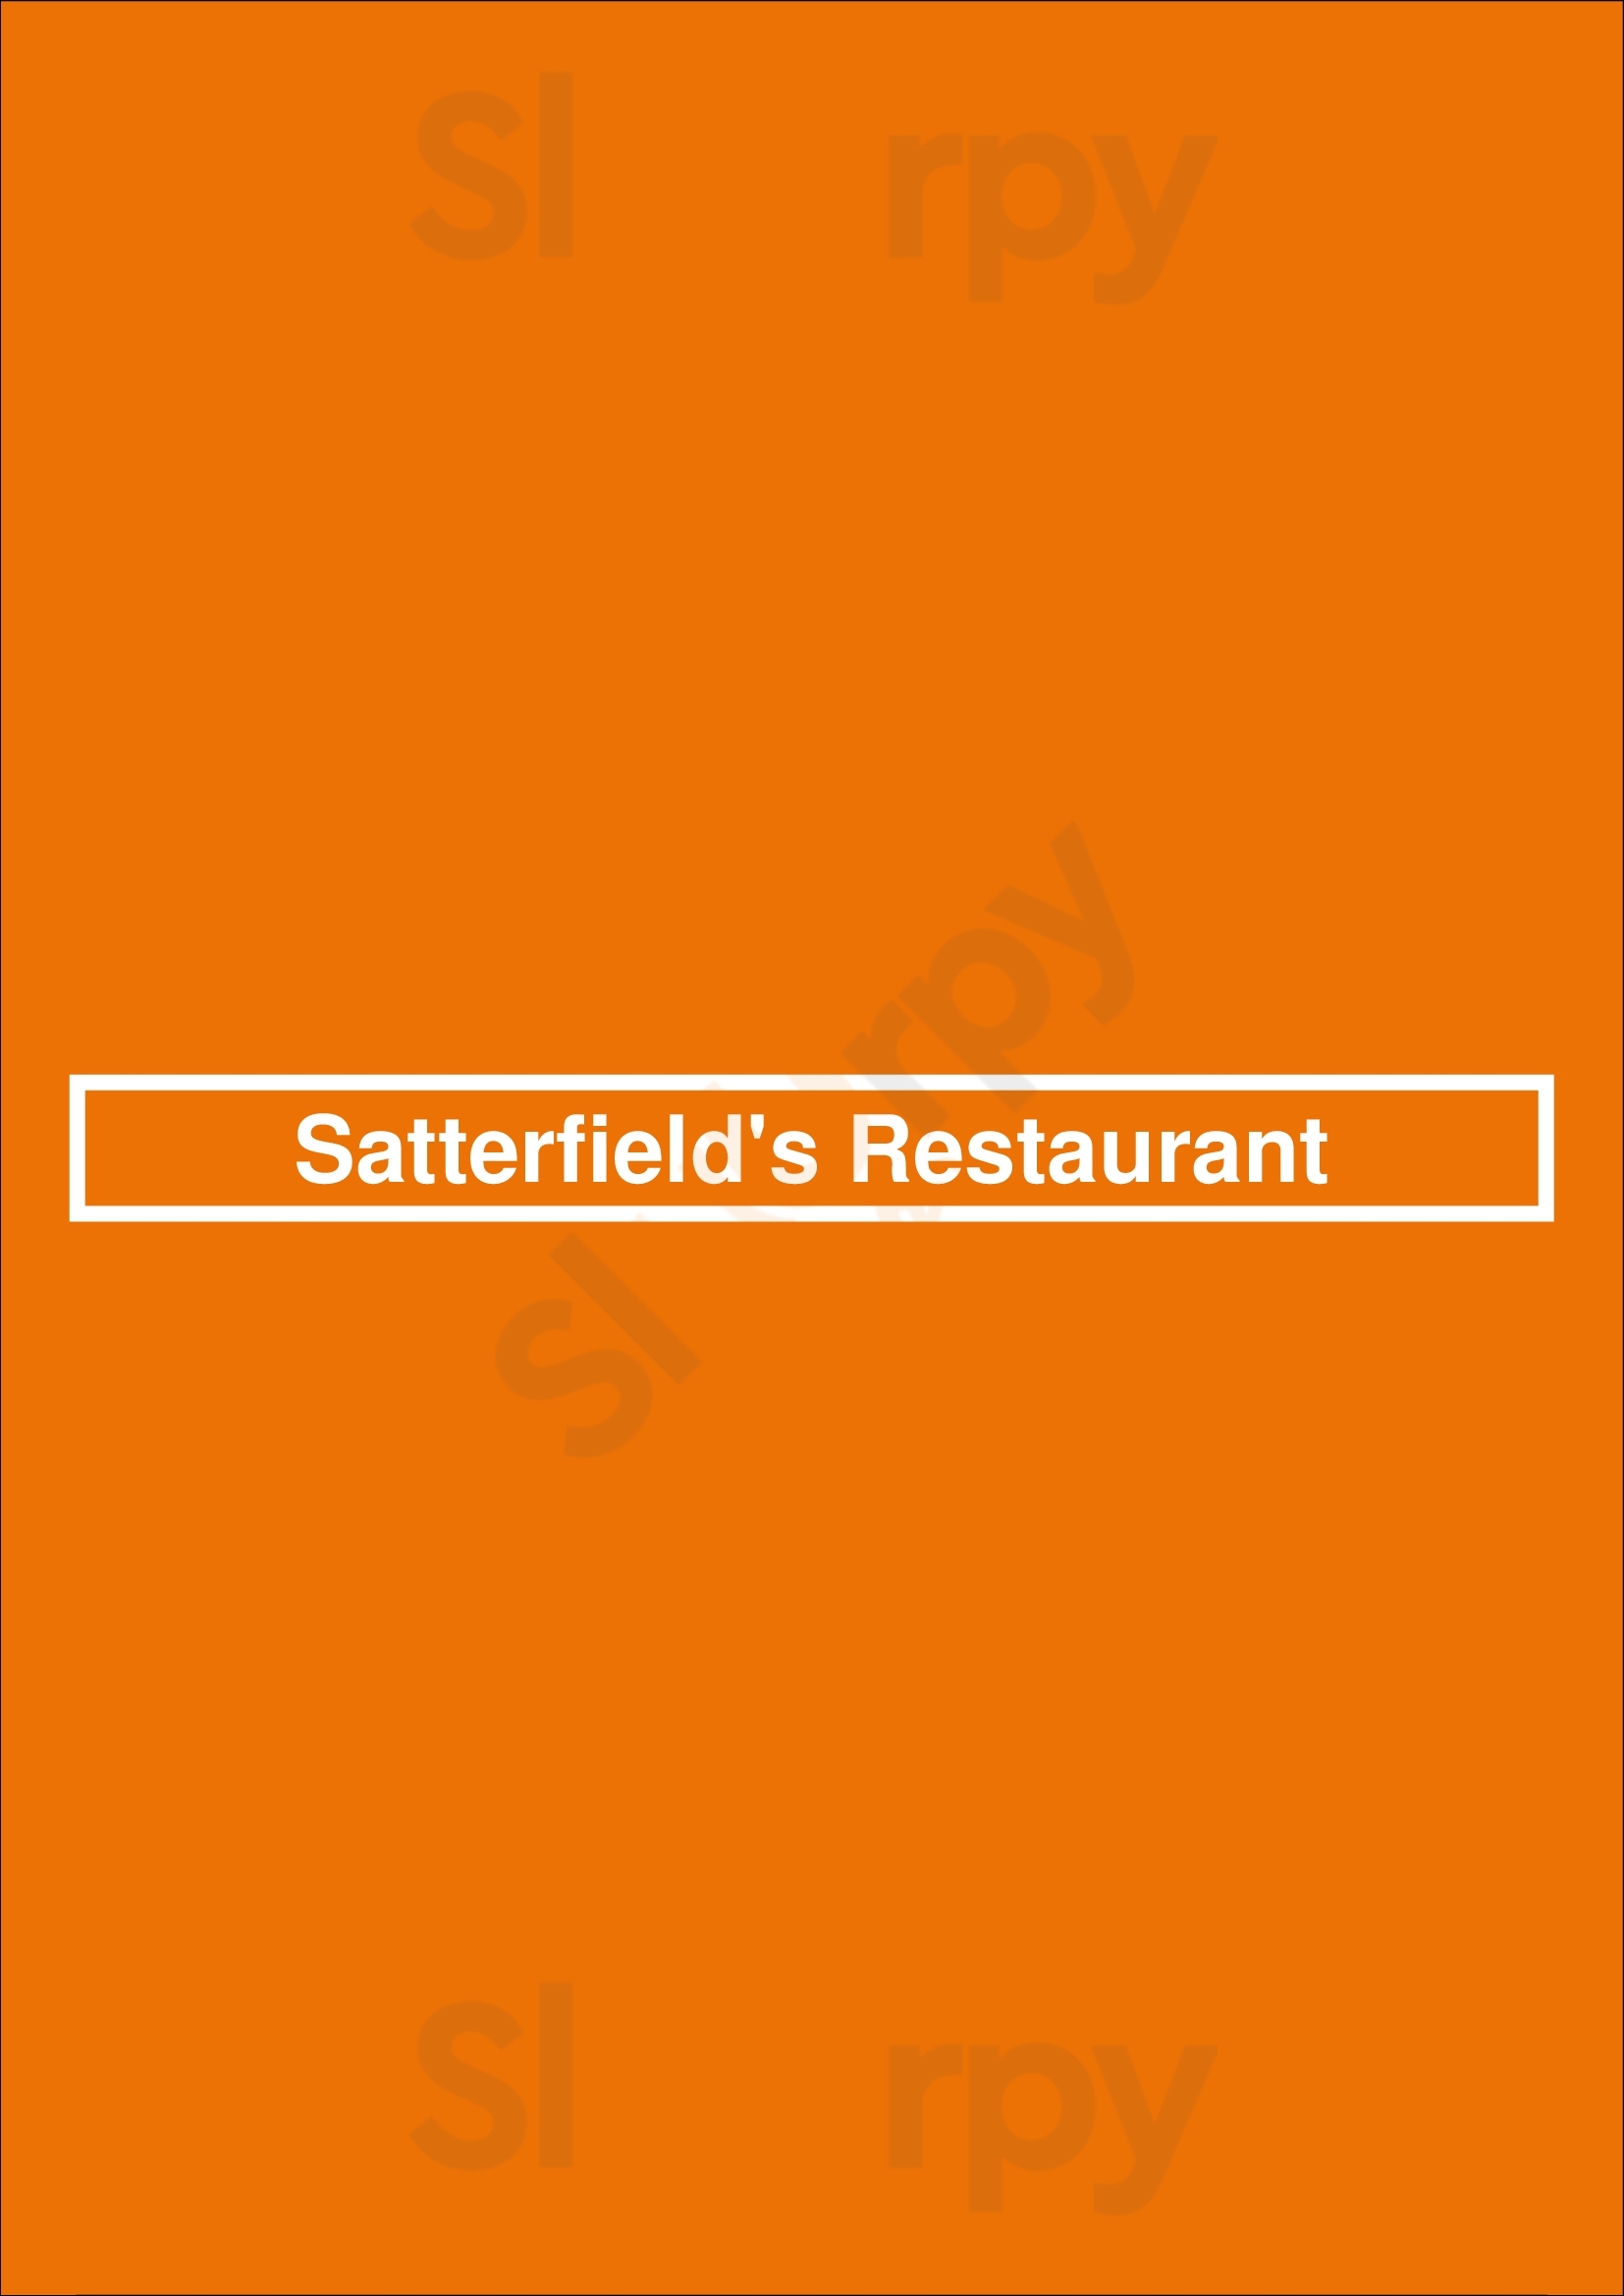 Satterfield's Restaurant Birmingham Menu - 1